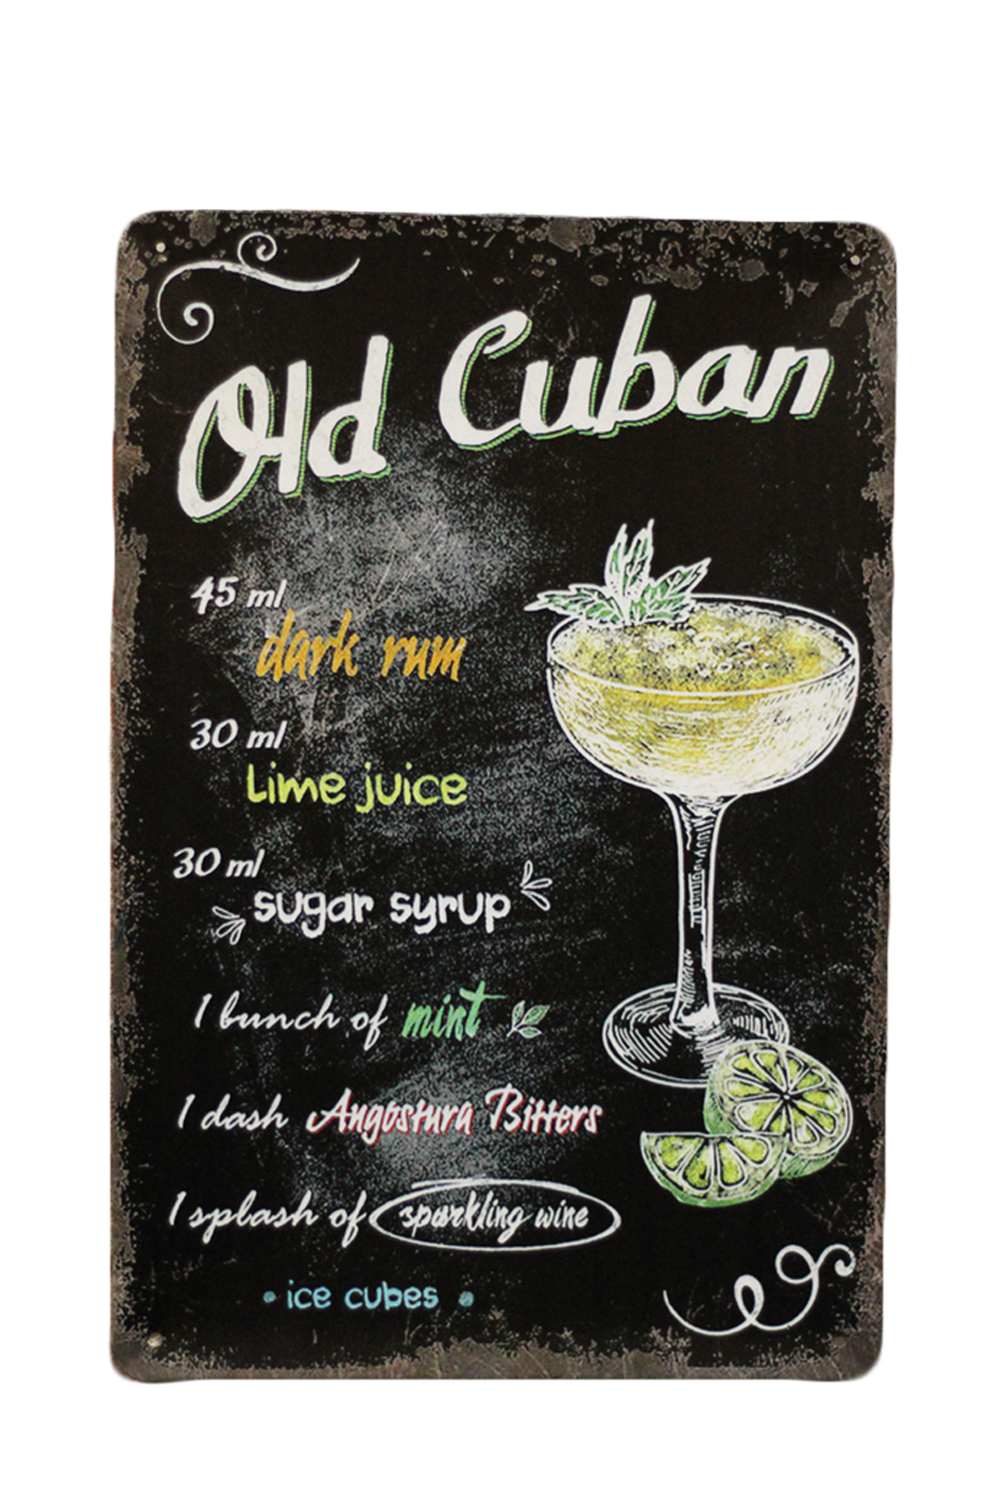 Old cuban – Metalen borden